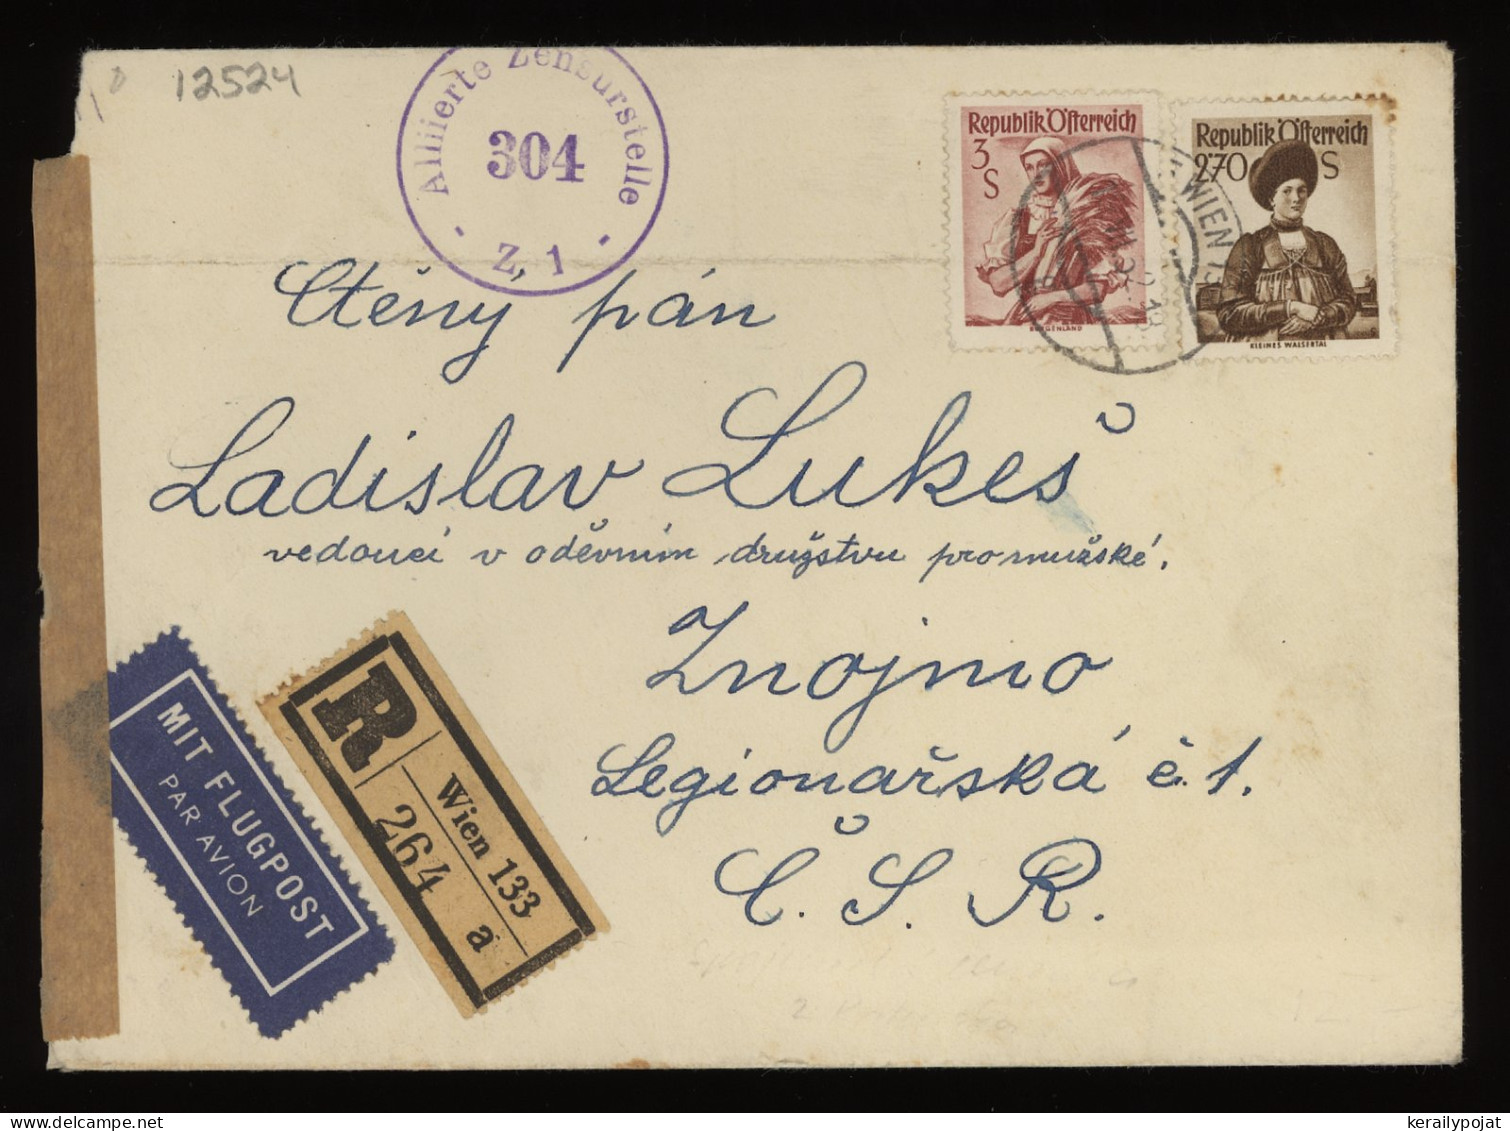 Austria 1952 Wien 133 Ew Air Mail Cover To Czechoslovakia__(12524) - Covers & Documents